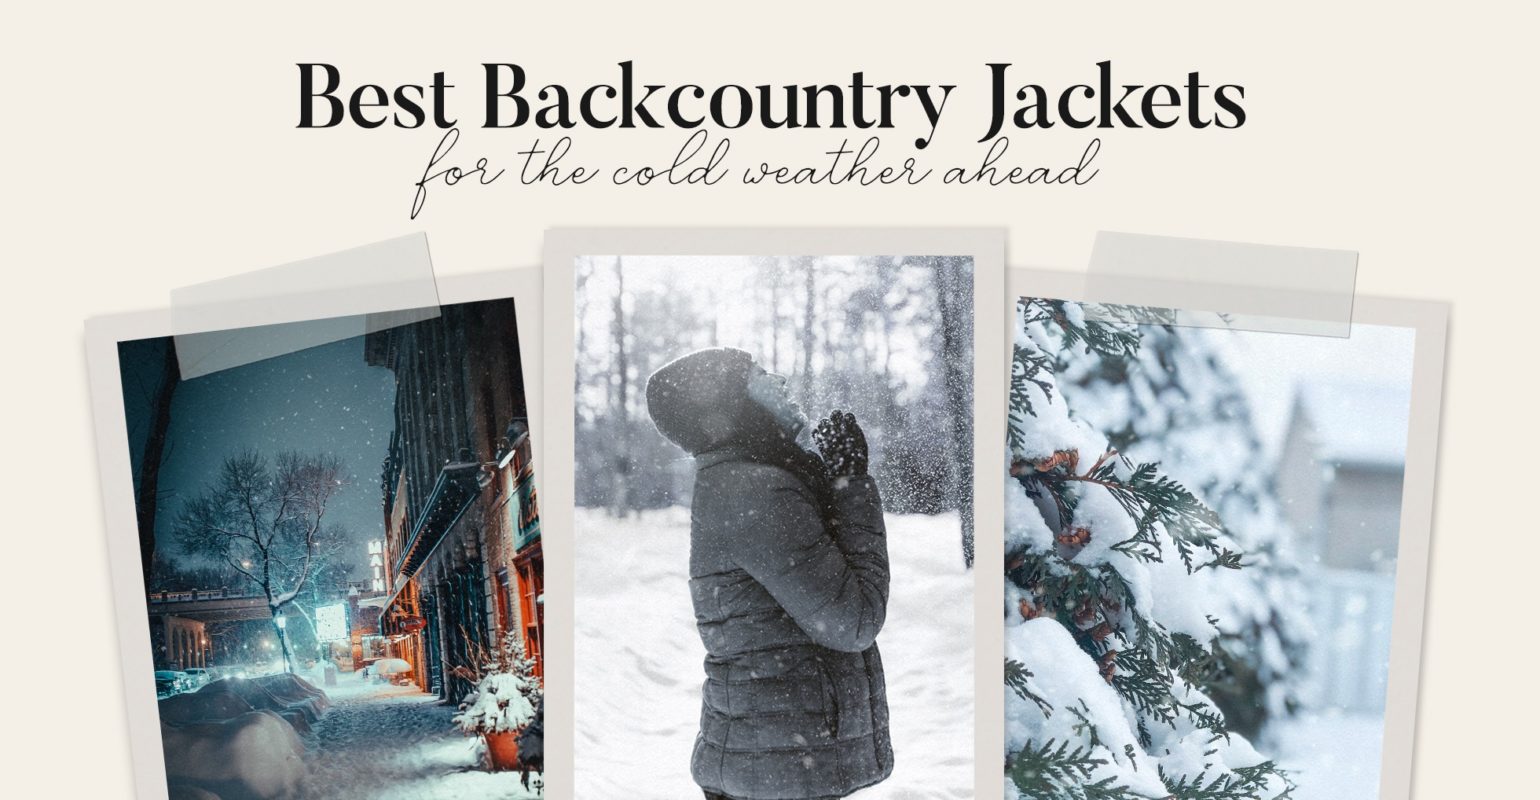 Best Backcountry Jackets